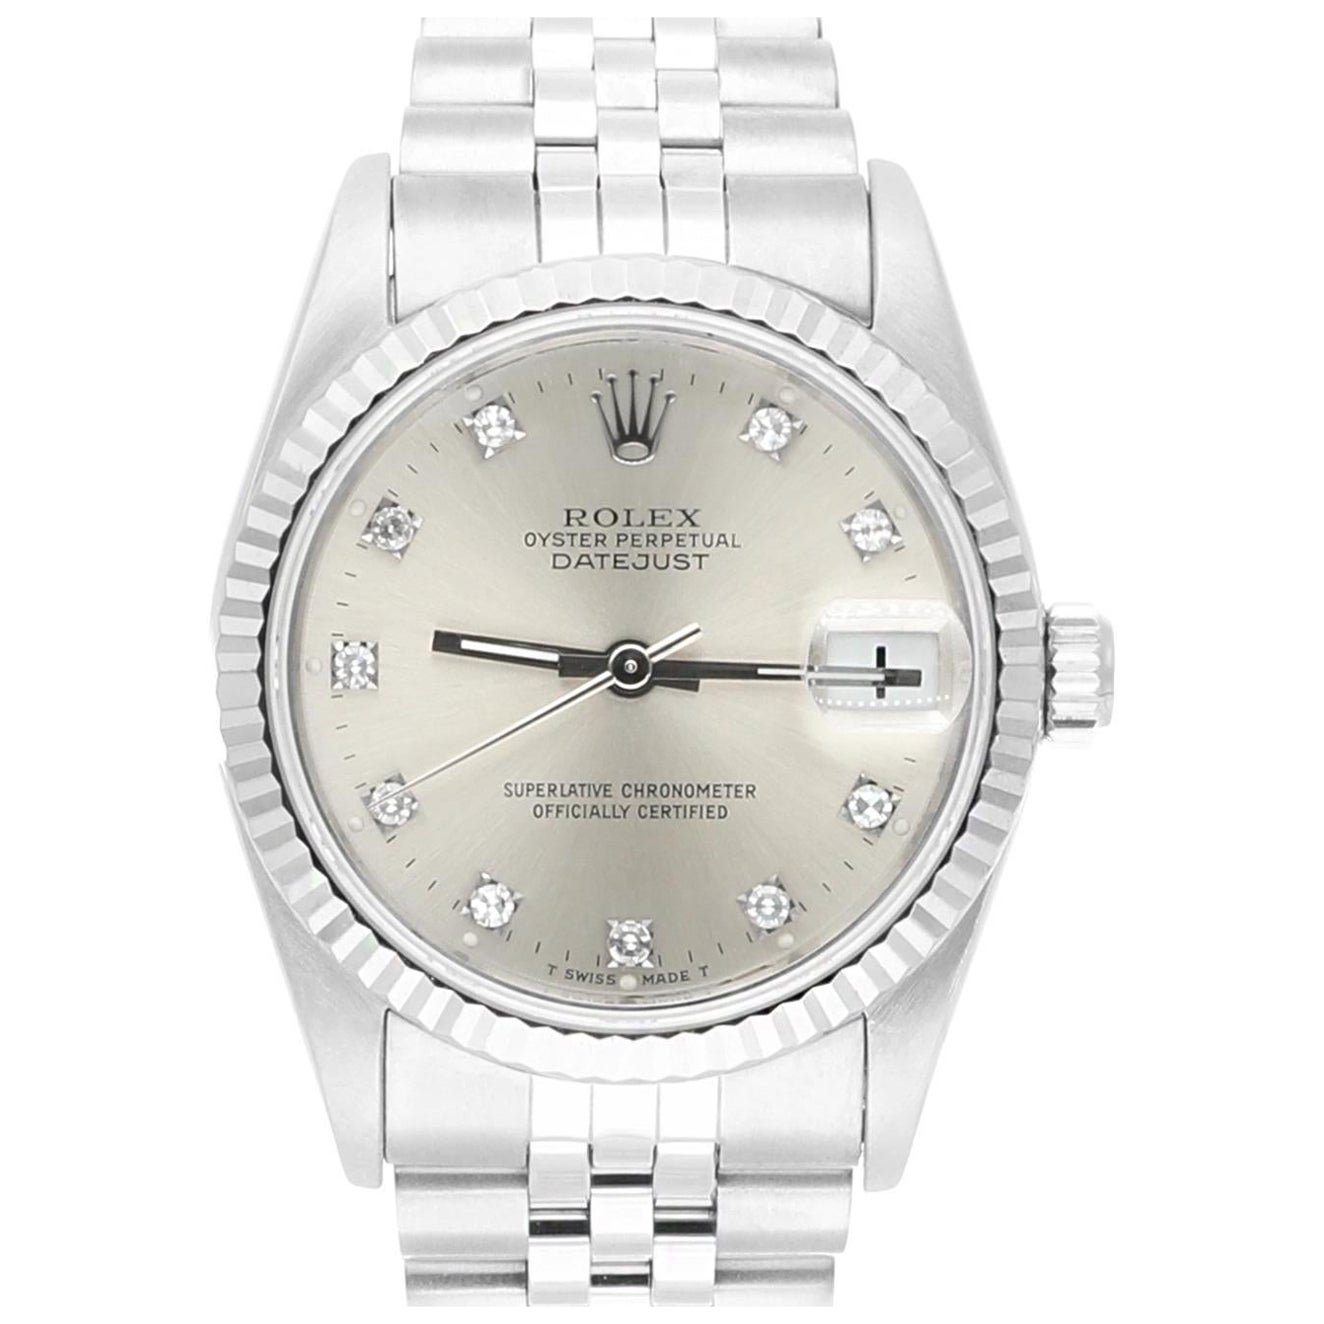 Rolex Datejust 31 Silver Diamond Dial Stainless Steel Watch White Gold Bezel